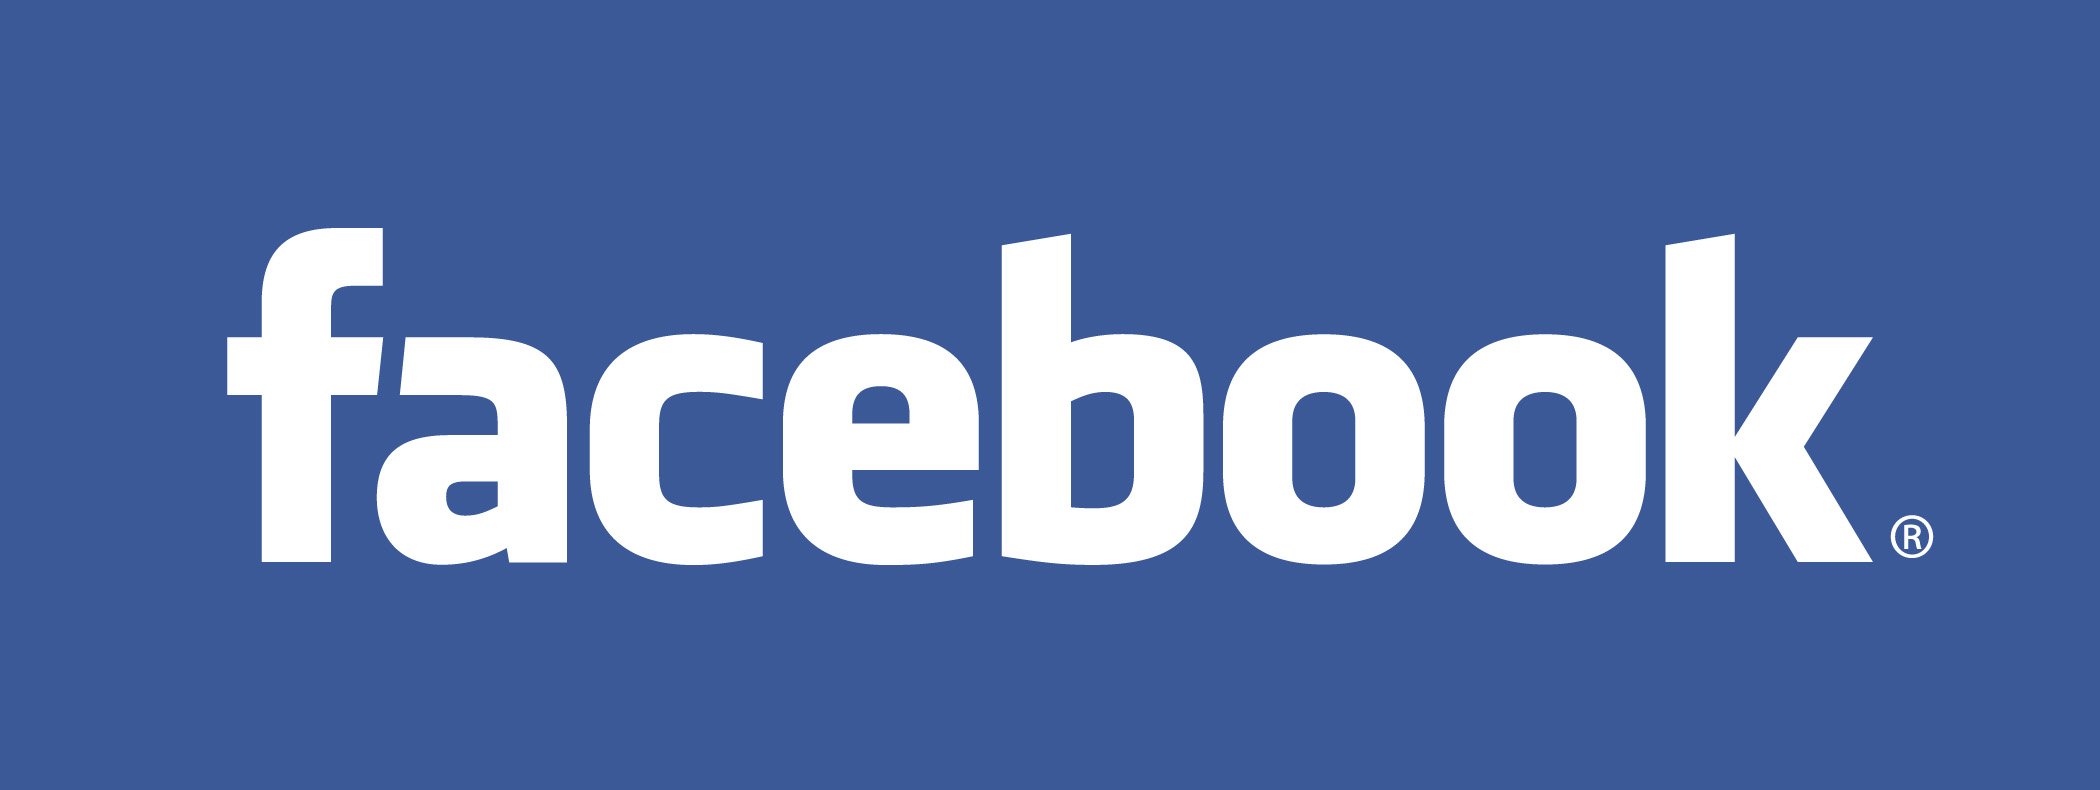 Facebook logo image from https://www.famouslogos.us/images/facebook-logo.jpg